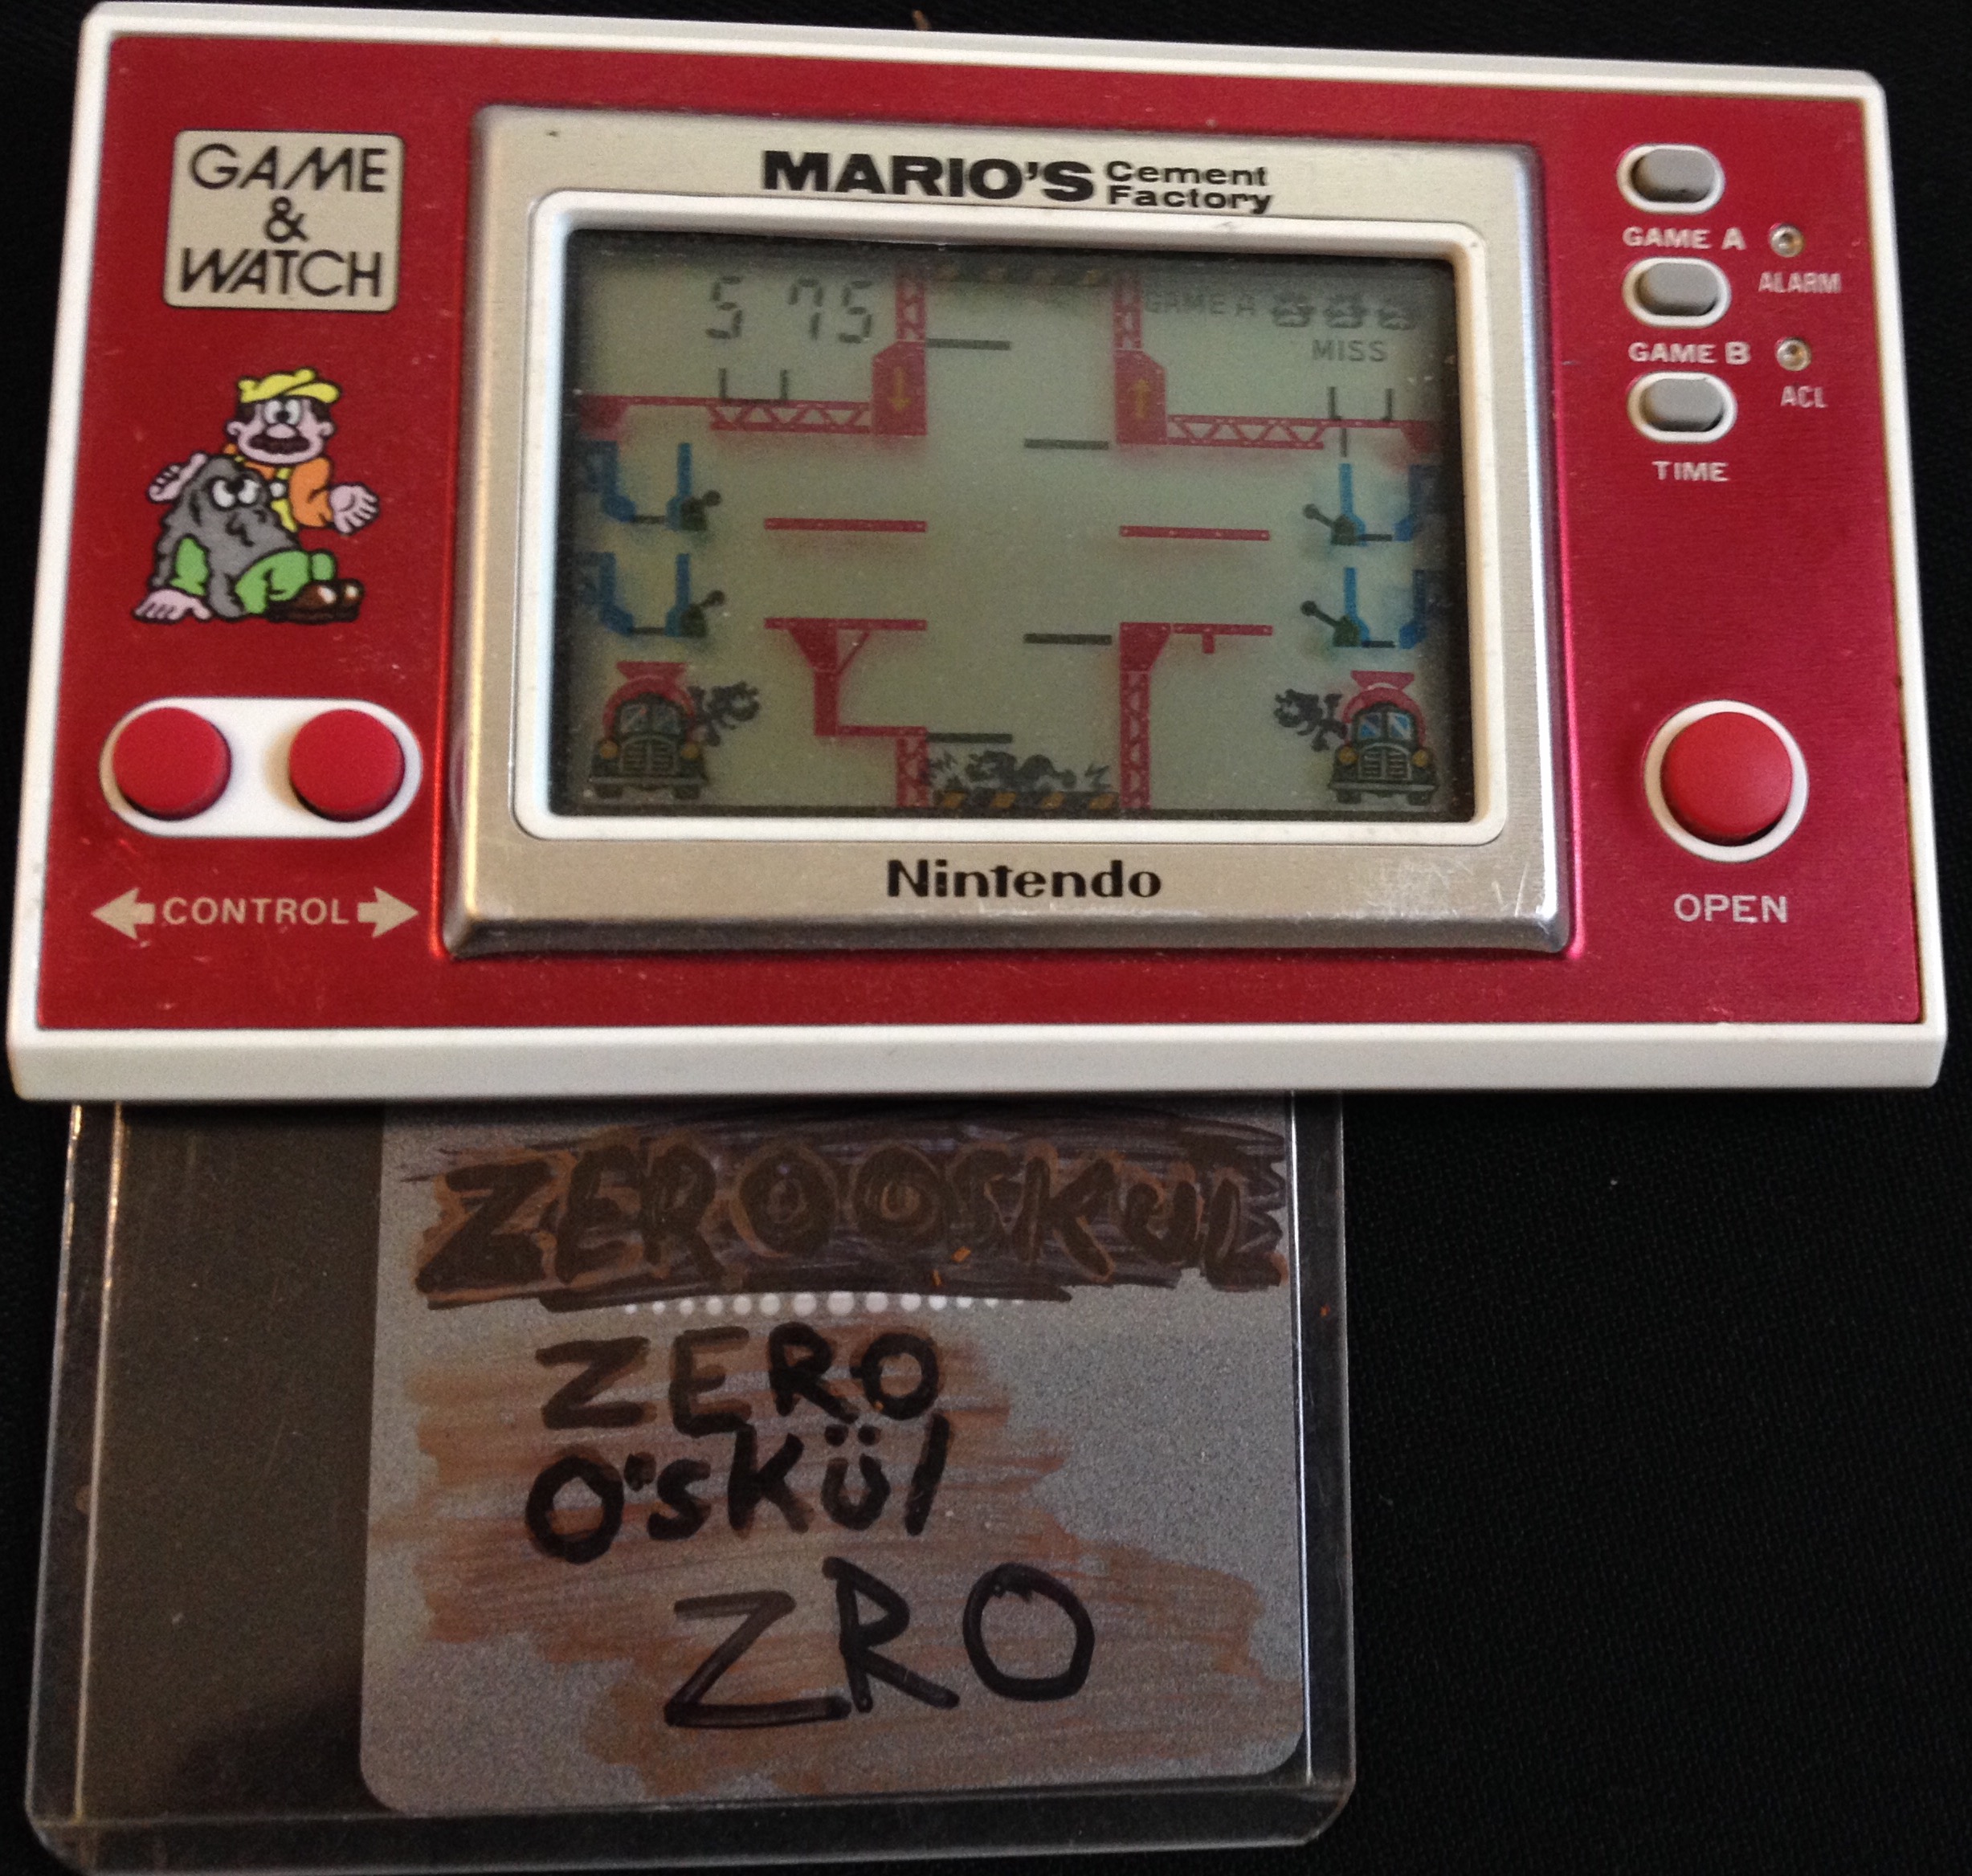 zerooskul: Game & Watch: Mario